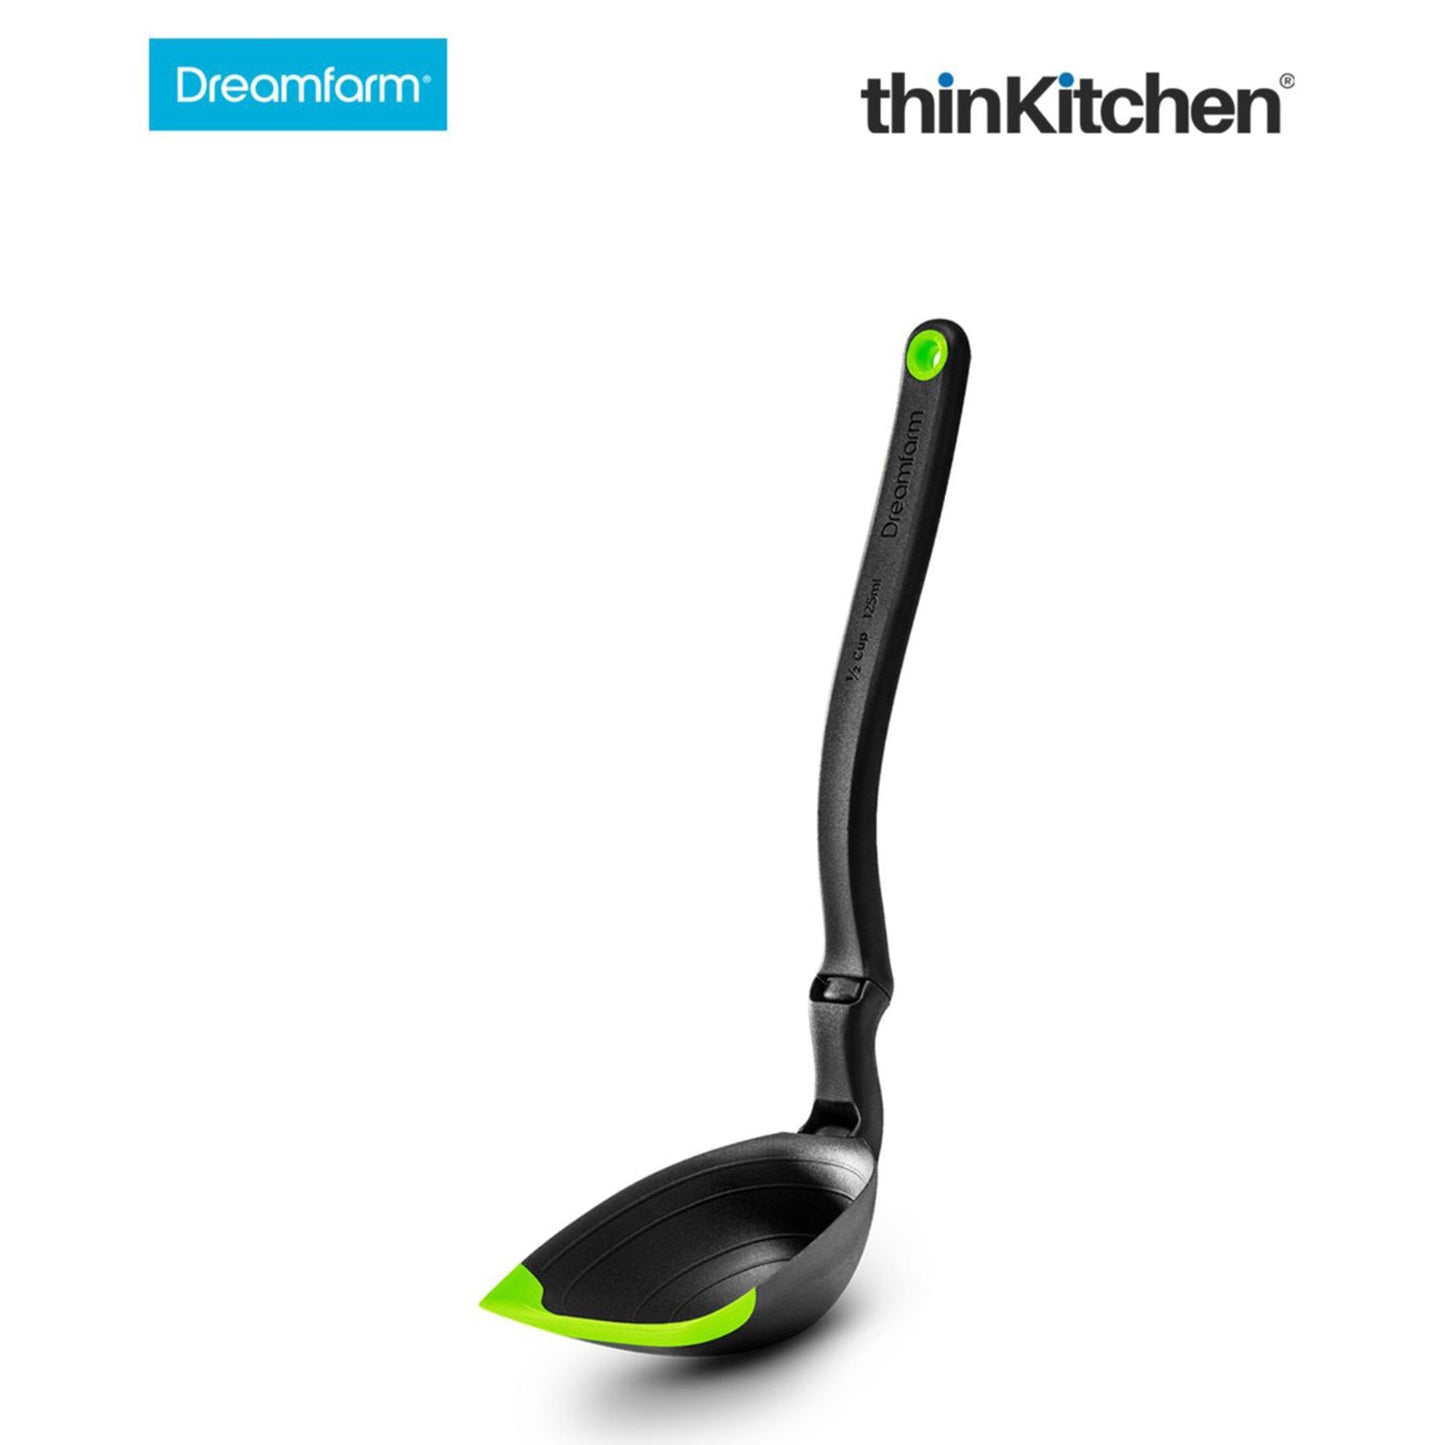 Dreamfarm Spadle Non Stick Cooking Spoon Serving Ladle With Measurements Green